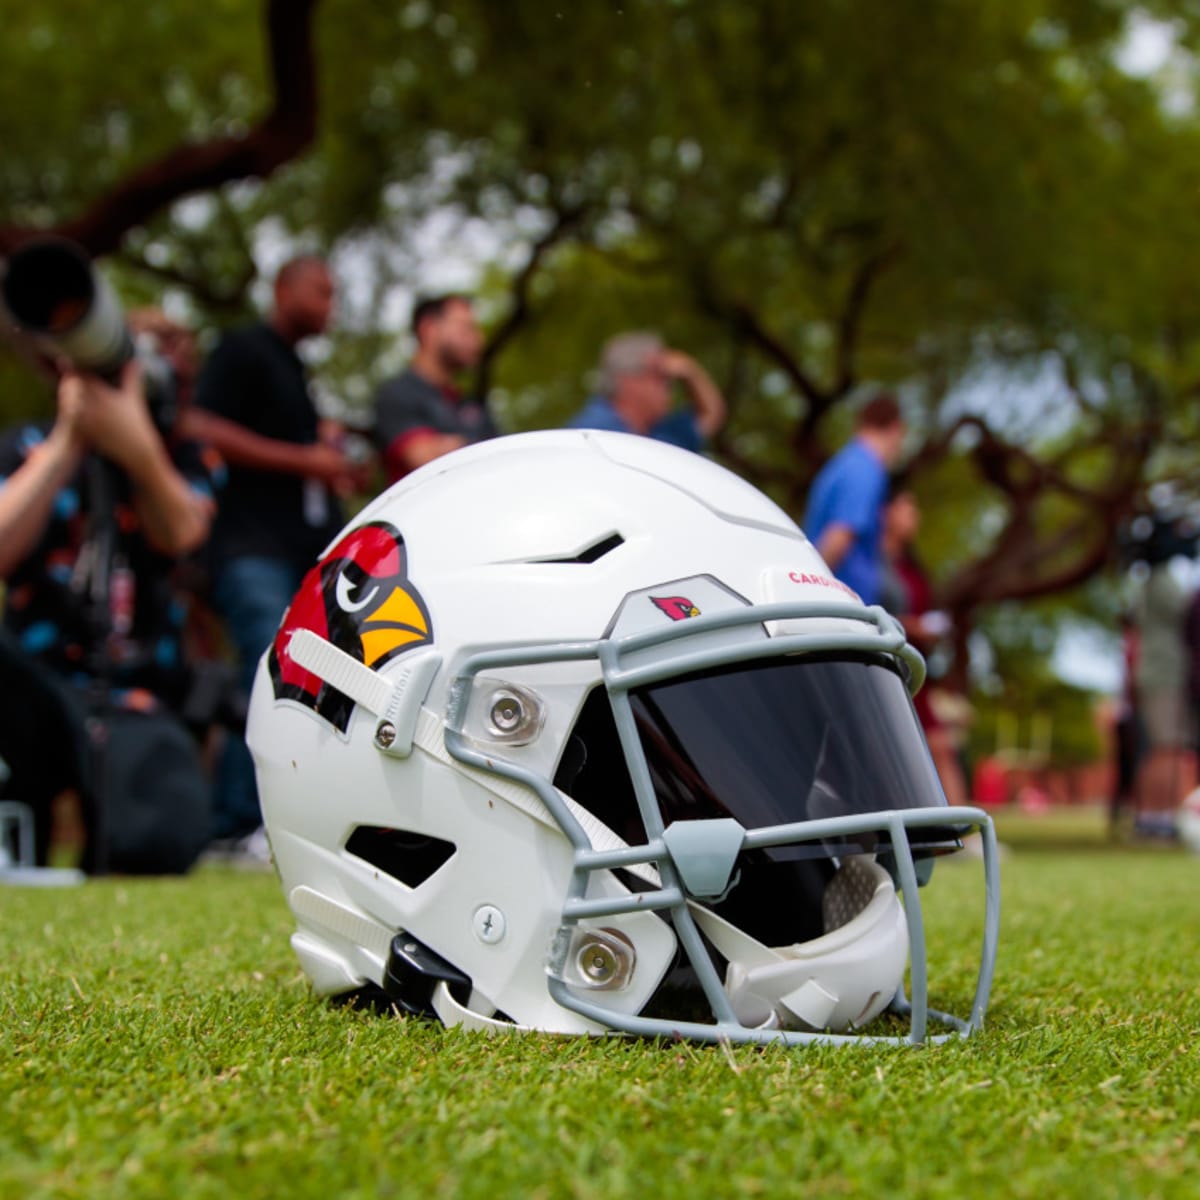 Arizona Cardinals on X: it's just a helmet